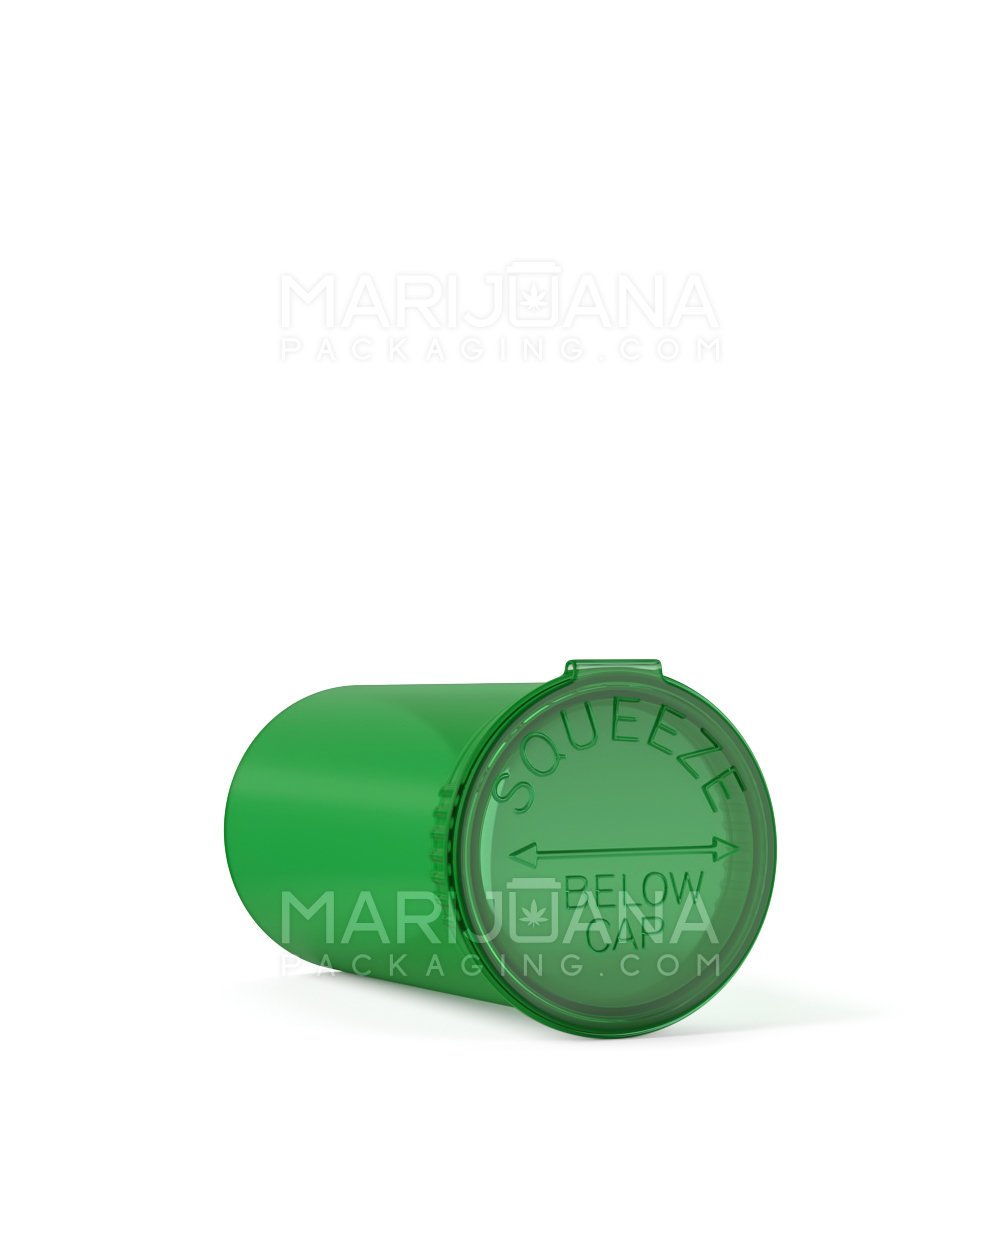 Child Resistant | Transparent Green Pop Top Bottles | 13dr - 2g - 315 Count - 3